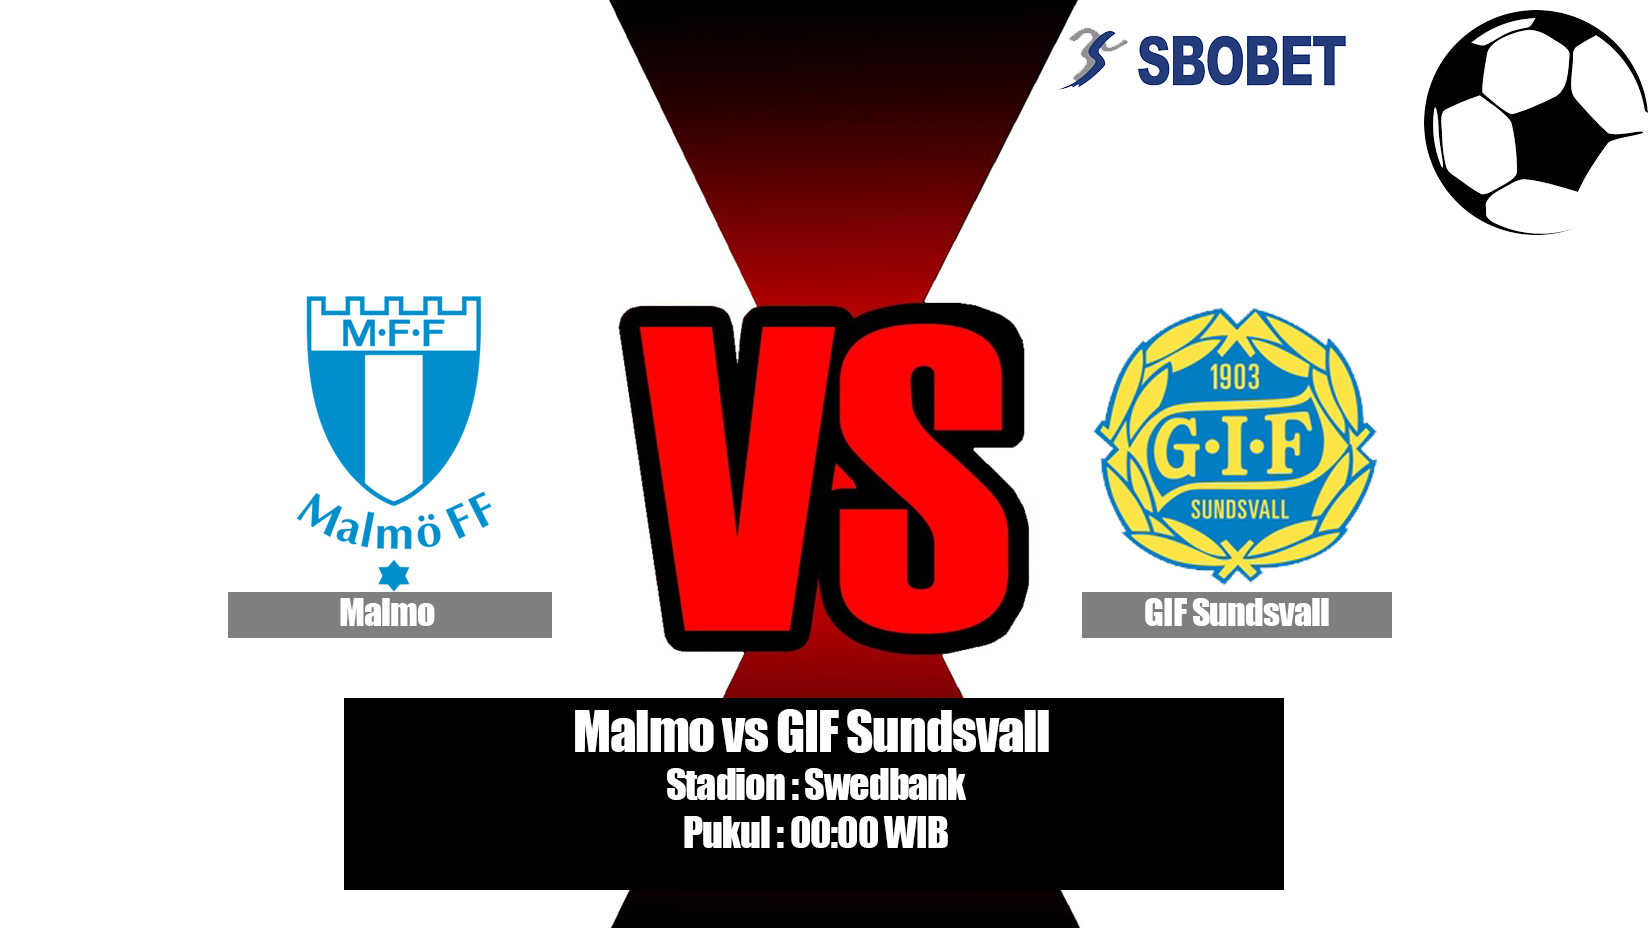 Prediksi Bola Malmo vs GIF Sundsvall 29 Mei 2019